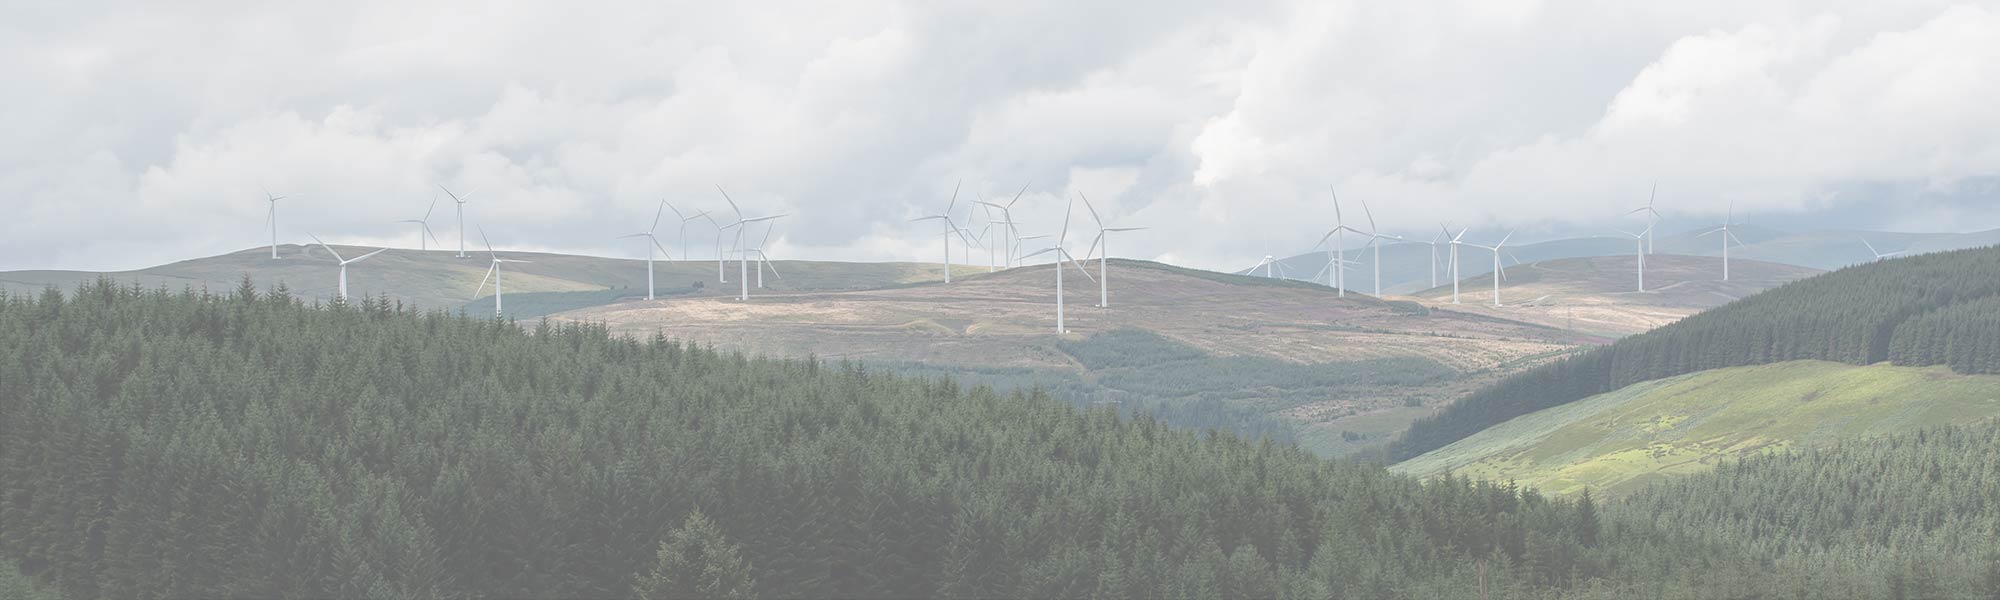 A modern wind farm in the Scottish Hills.